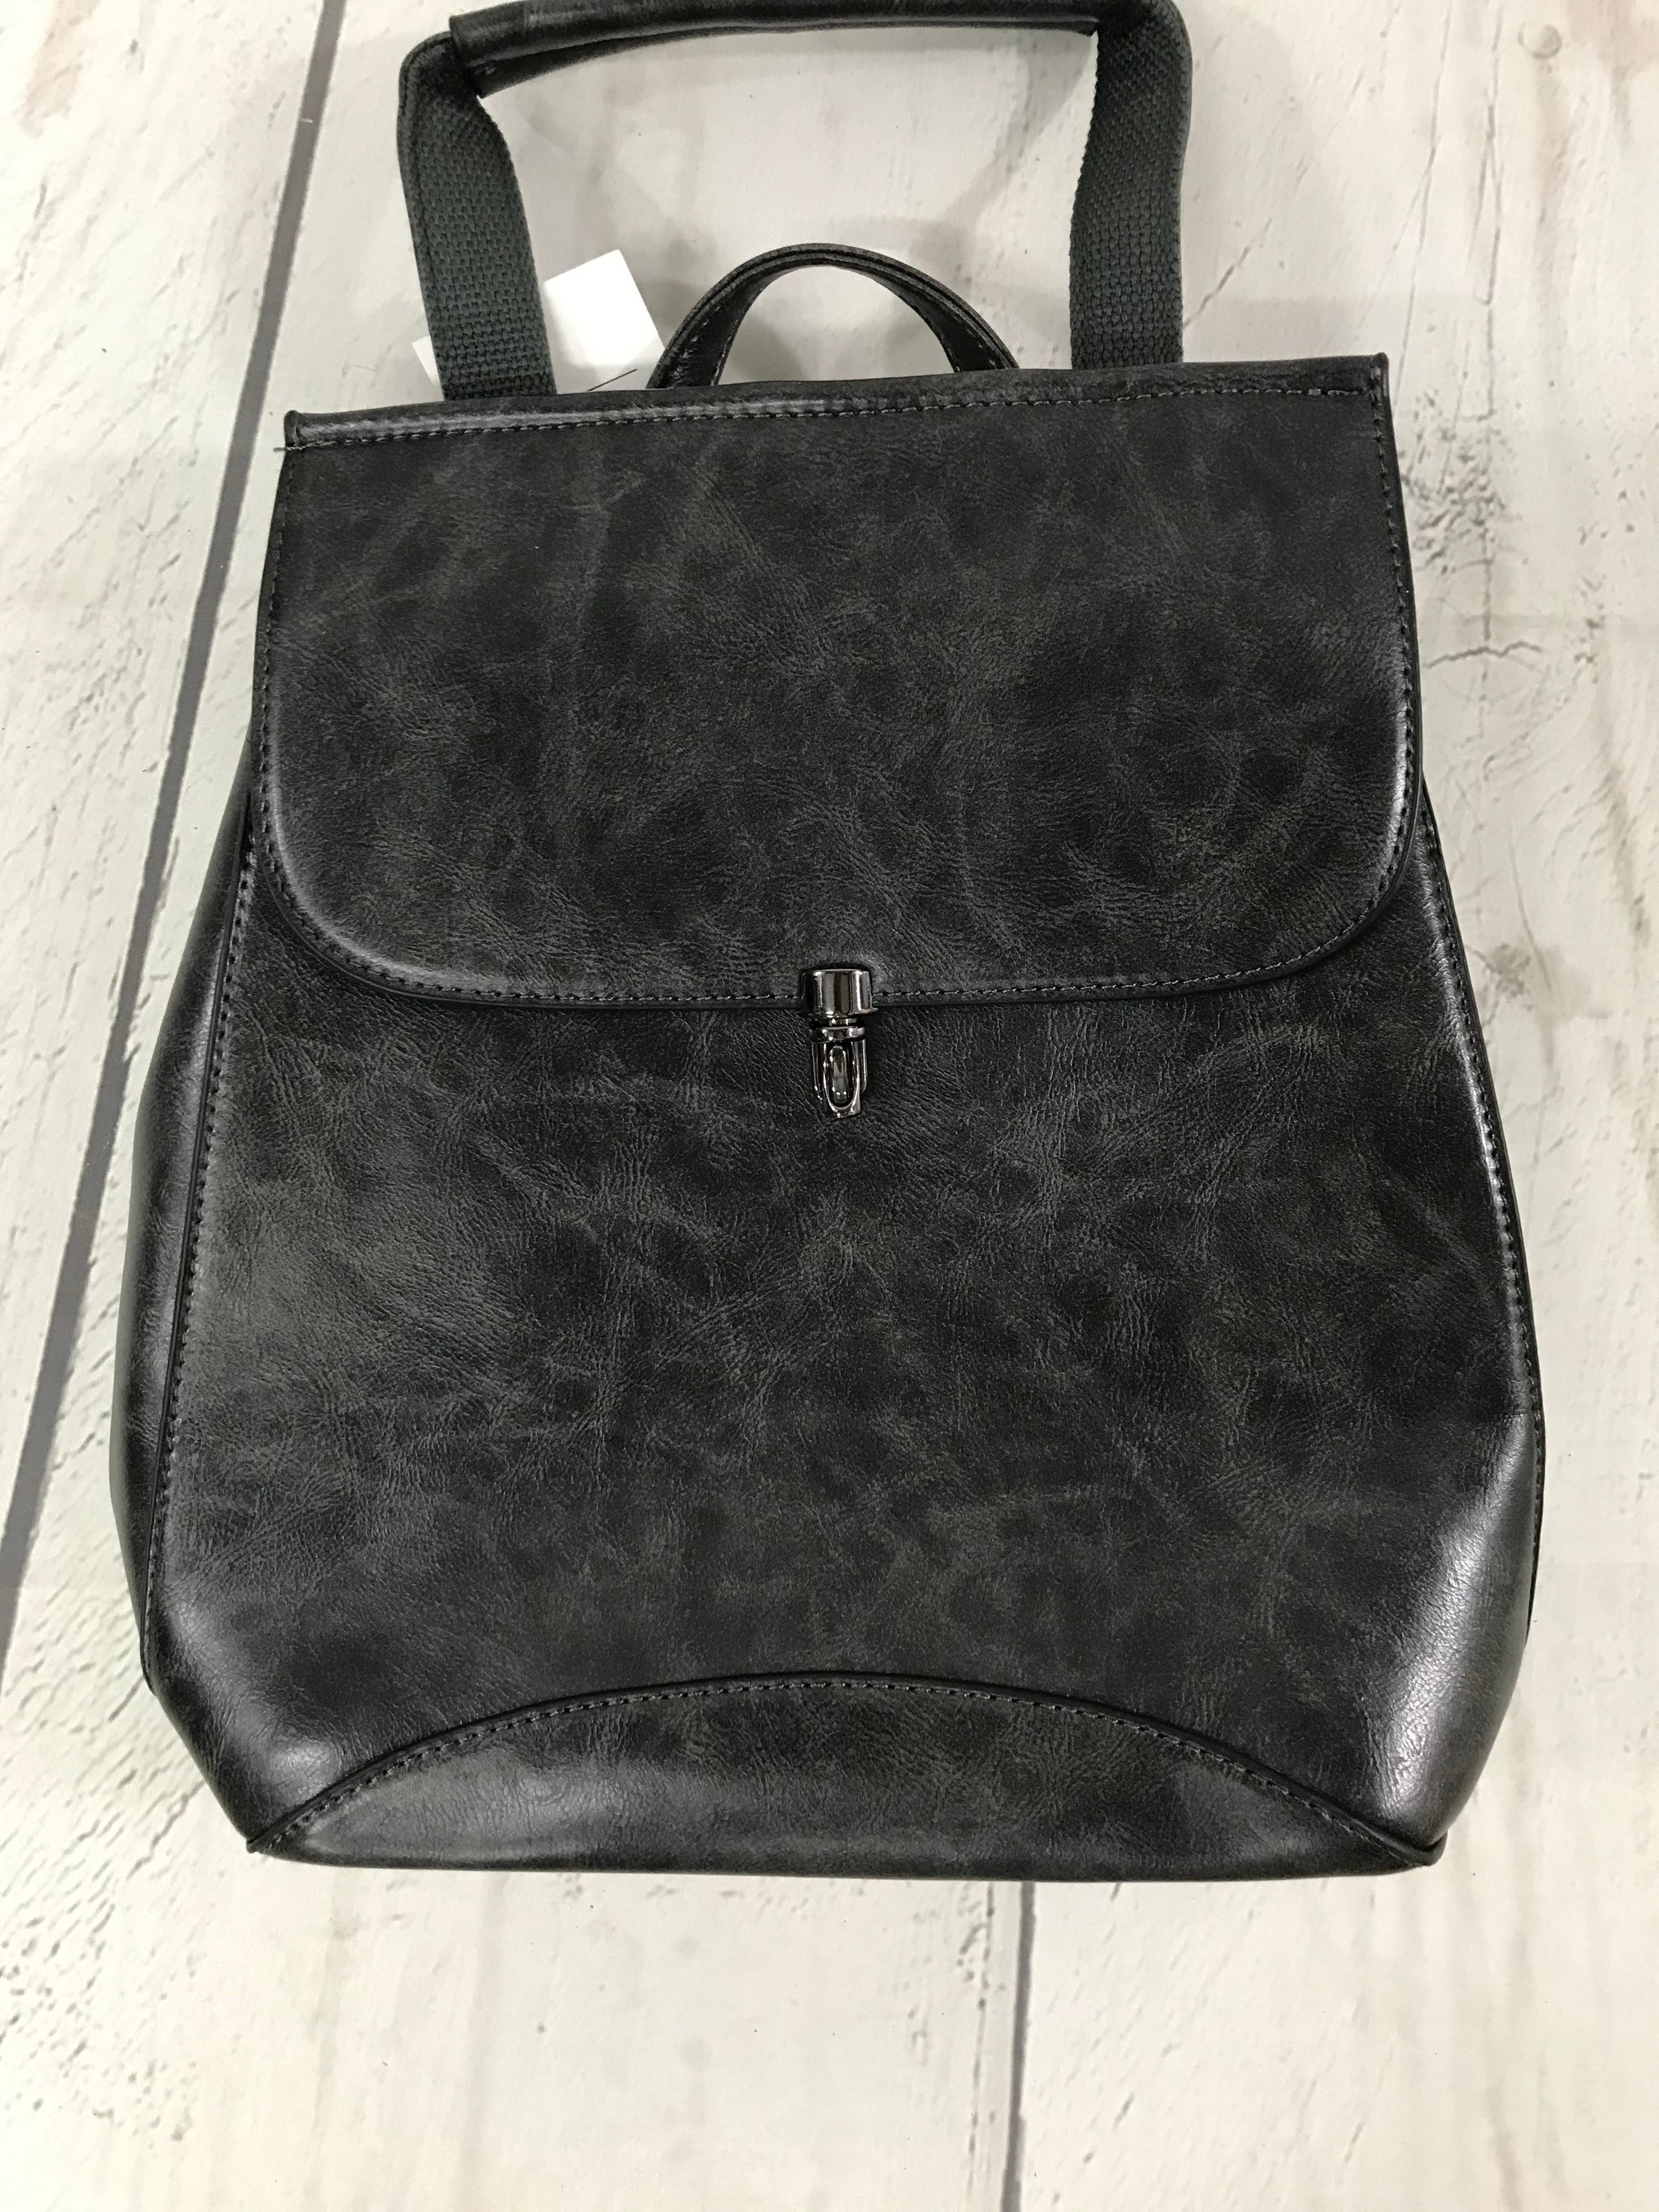 PU Leather Backpack Purse (Charcoal)